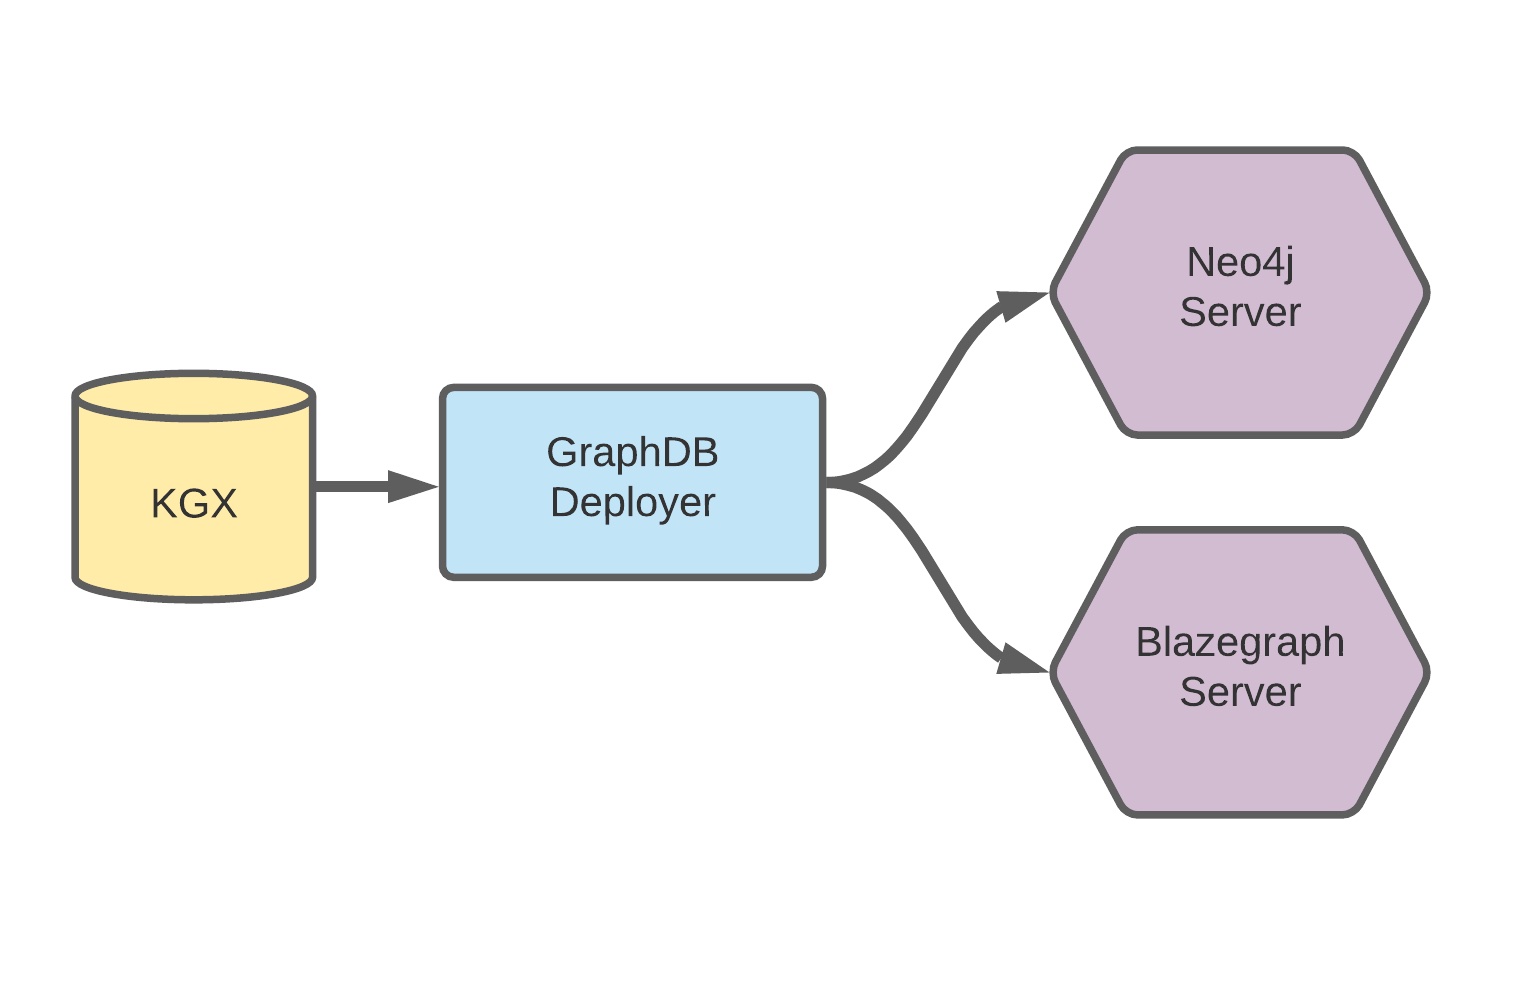 GraphDB Deployer